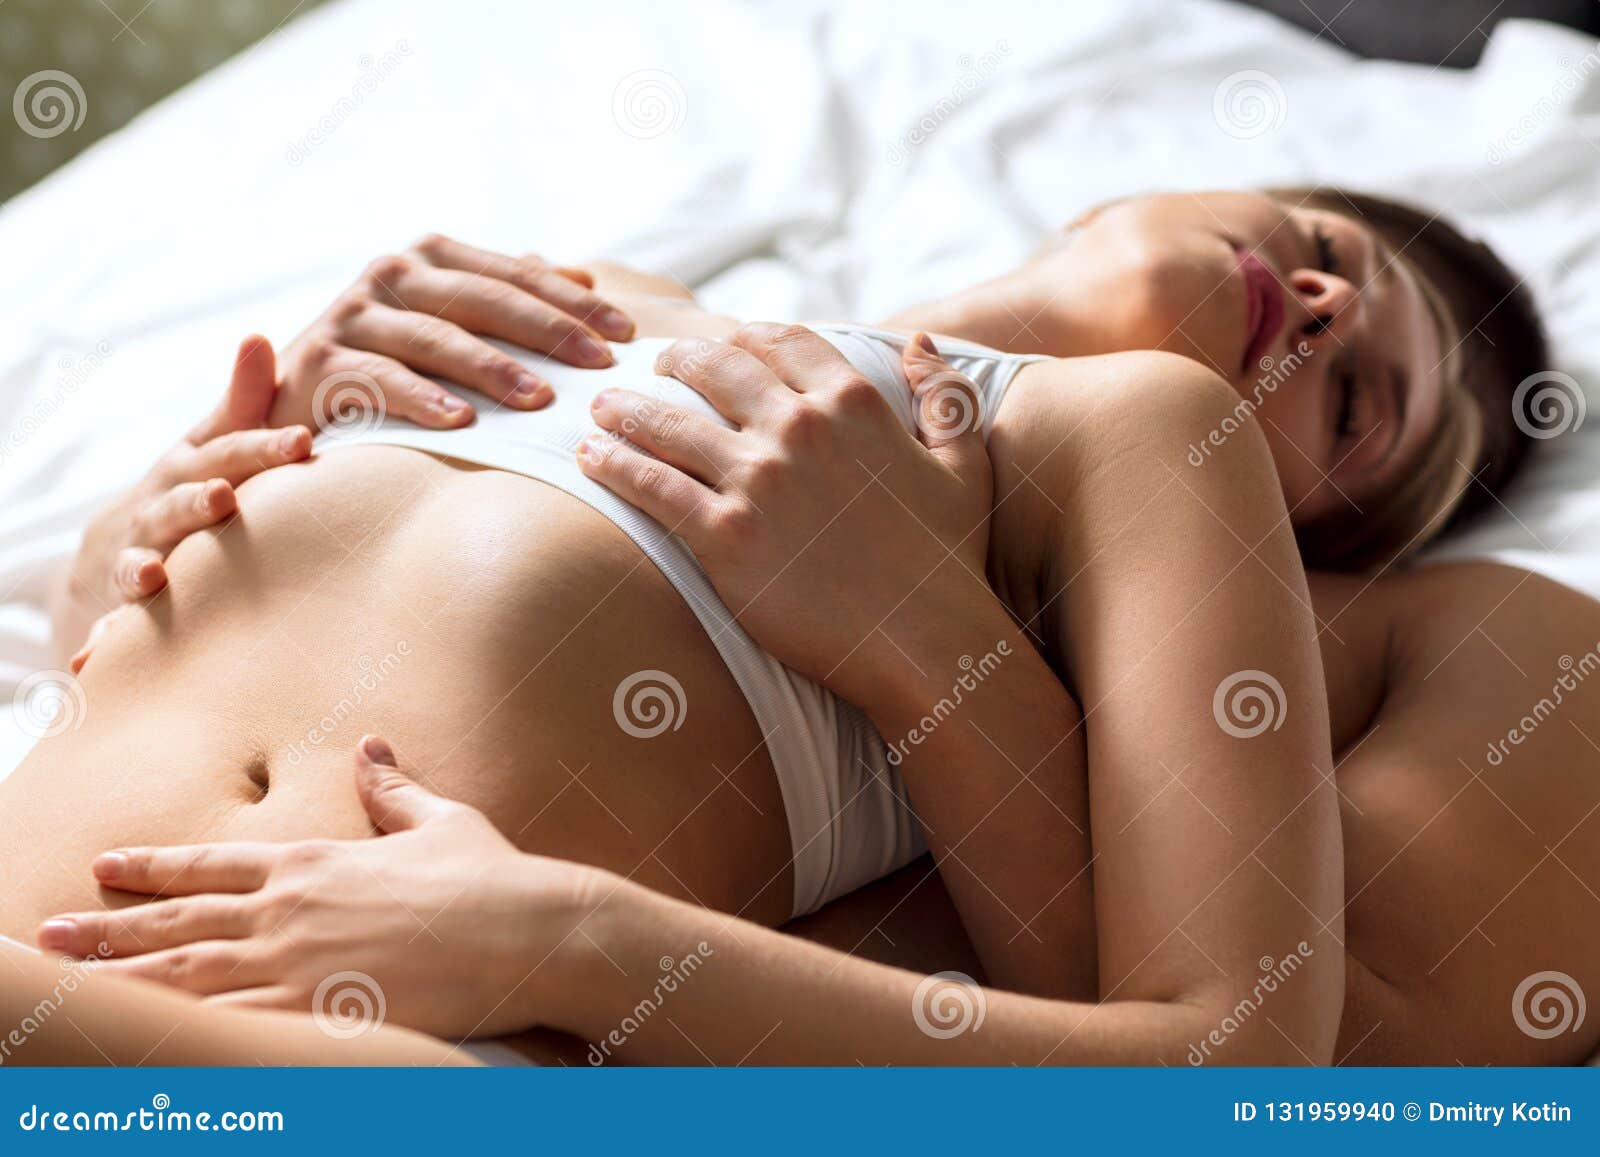 disha chitroda recommends Passionate Couple In Bed